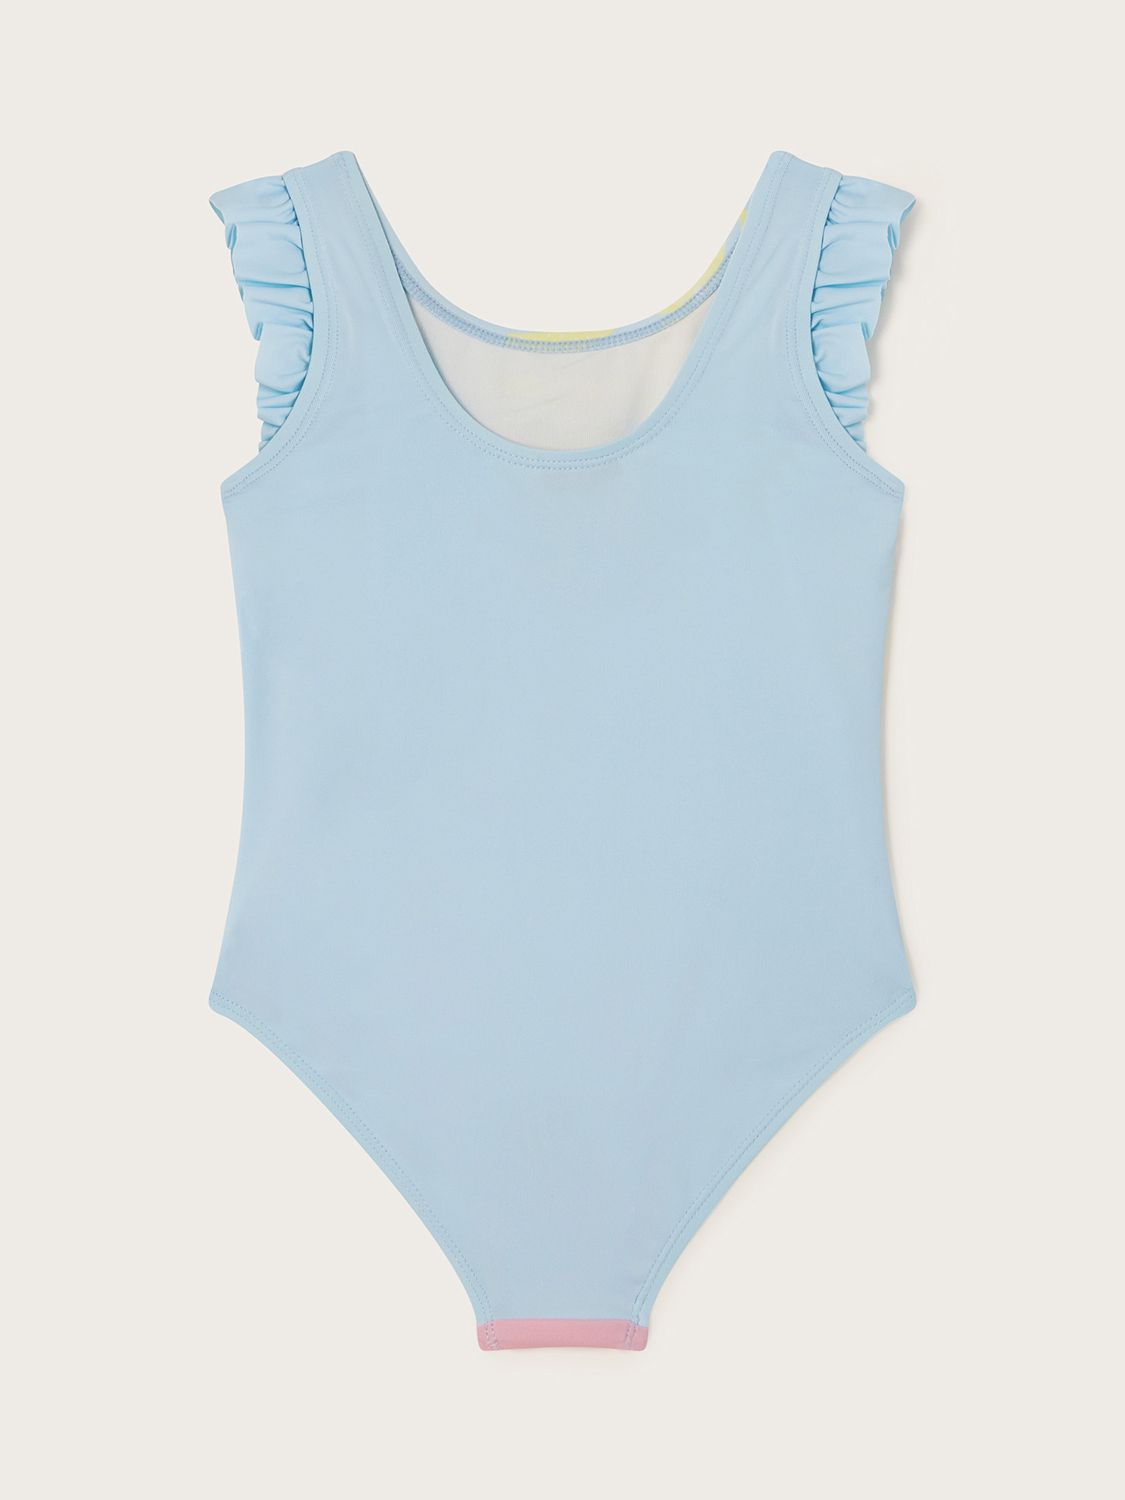 Monsoon Baby Sunshine Swimsuit, Blue, 0-3 months